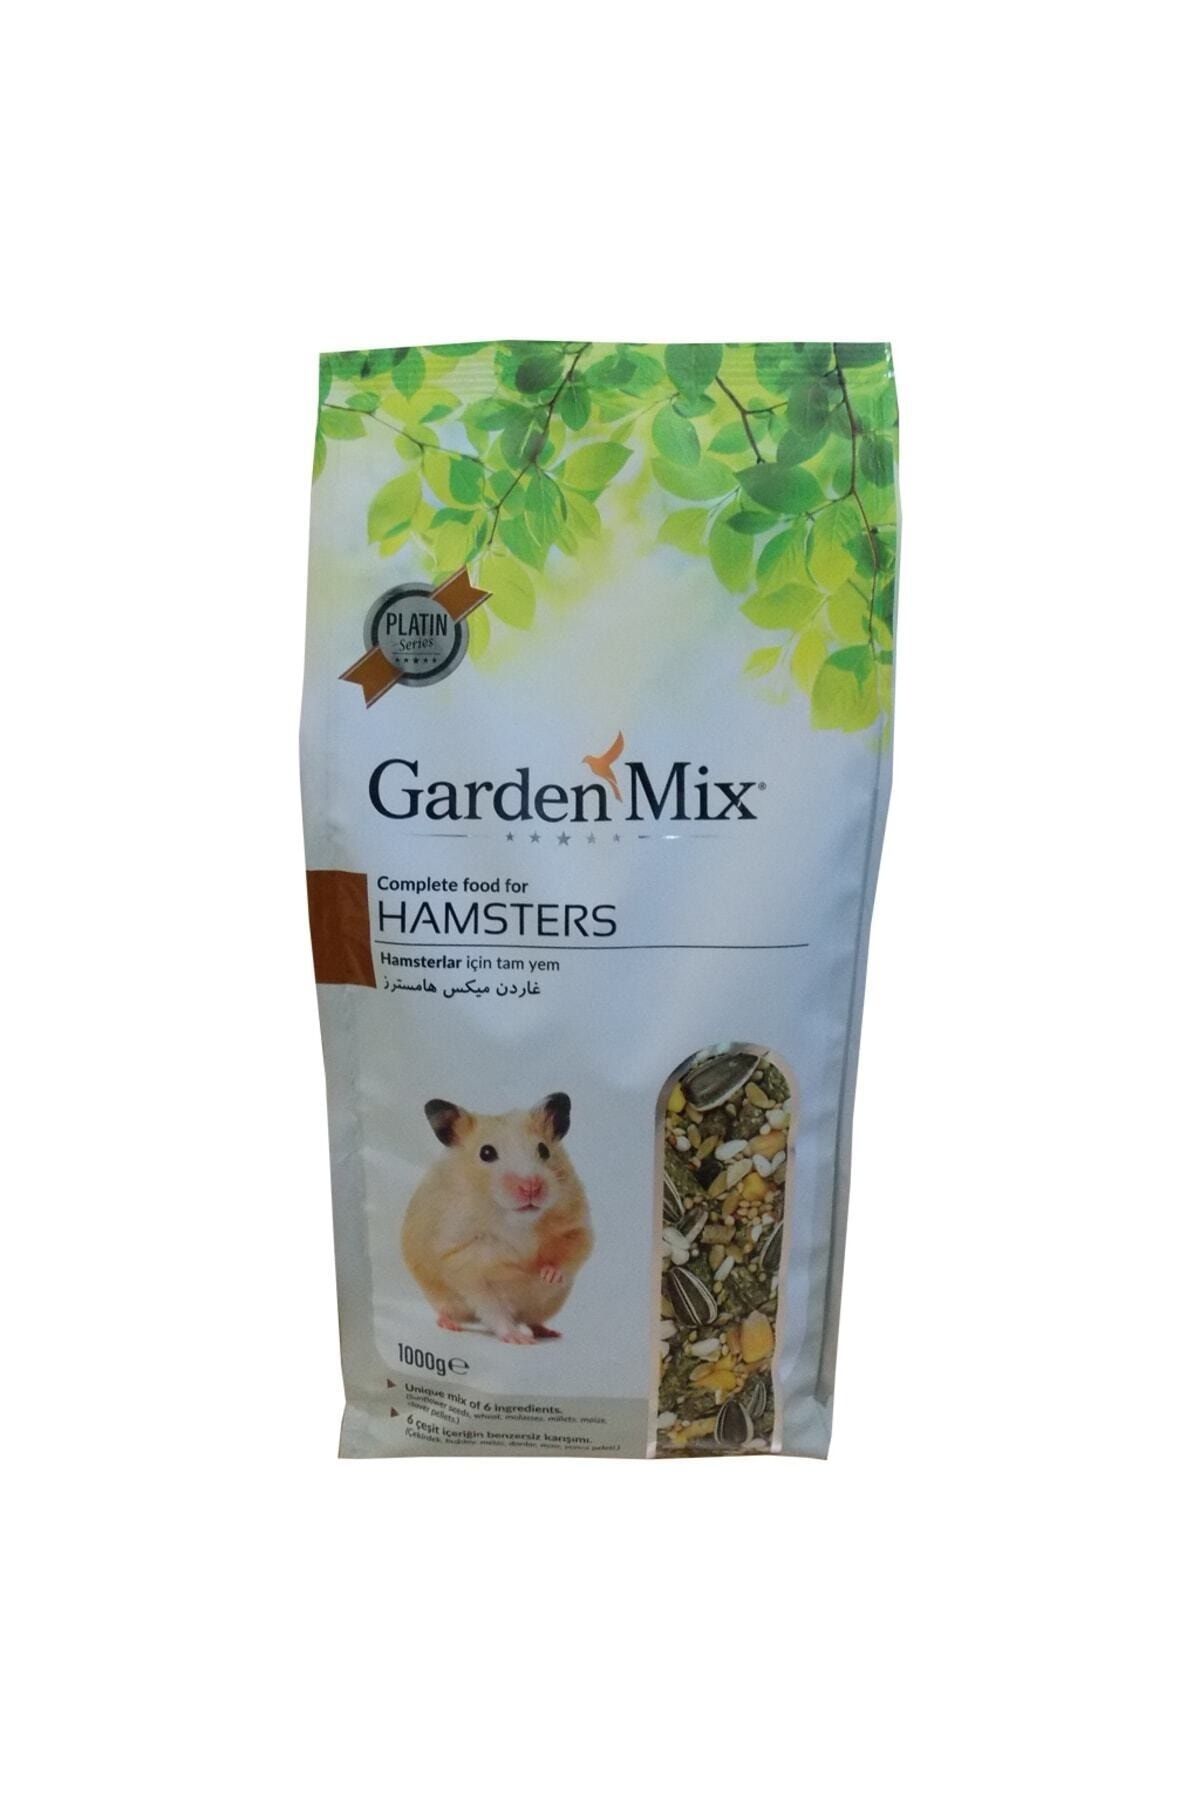 Gardenmix Garden Mix Platin Seri Hamster Yemi 1 Kg